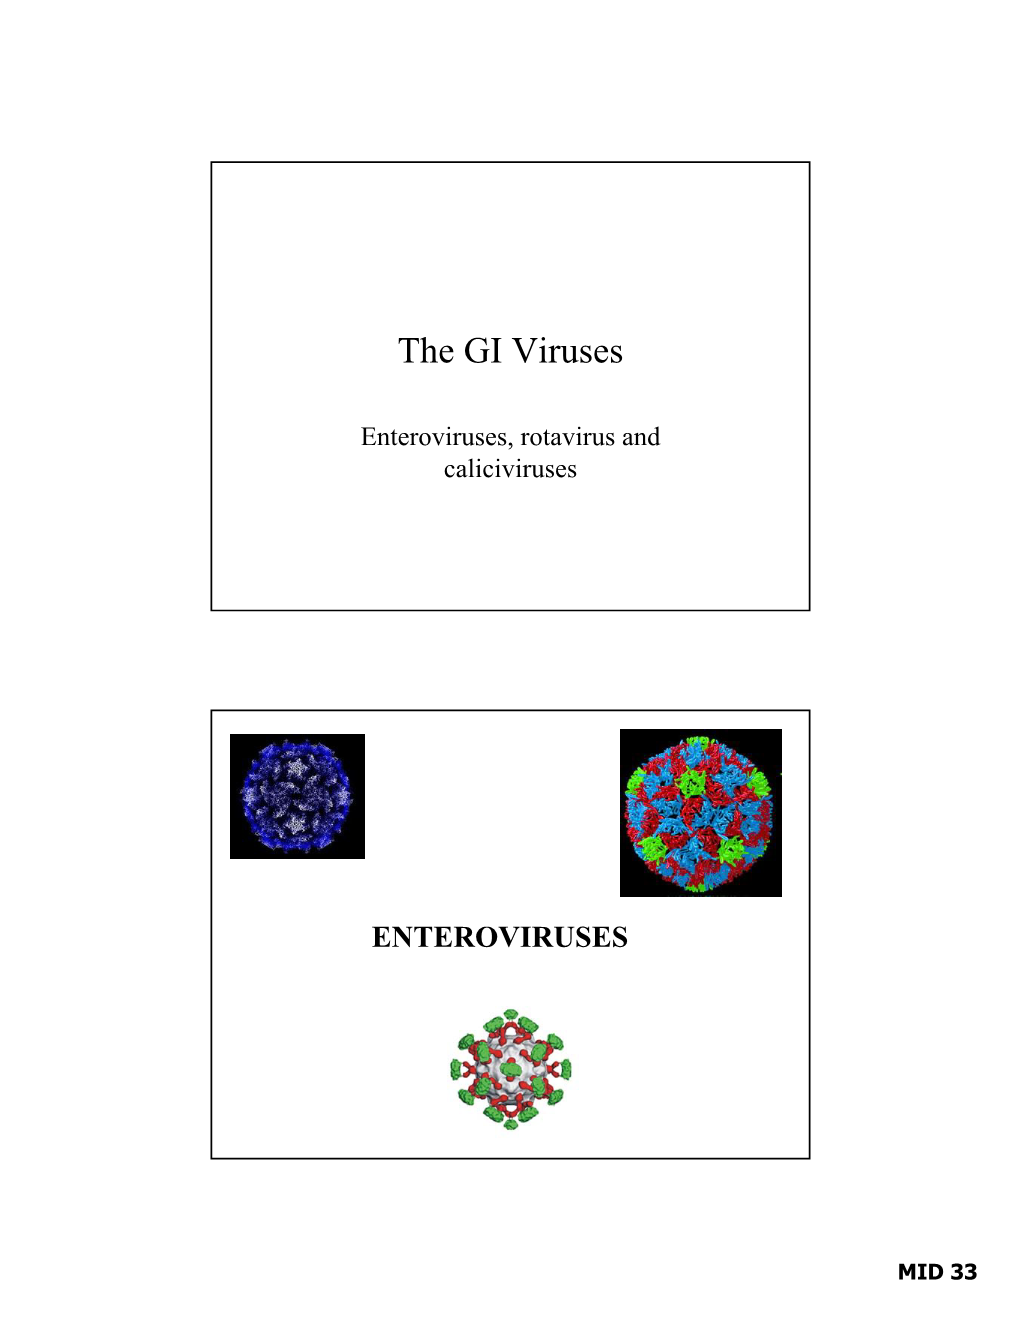 The GI Viruses